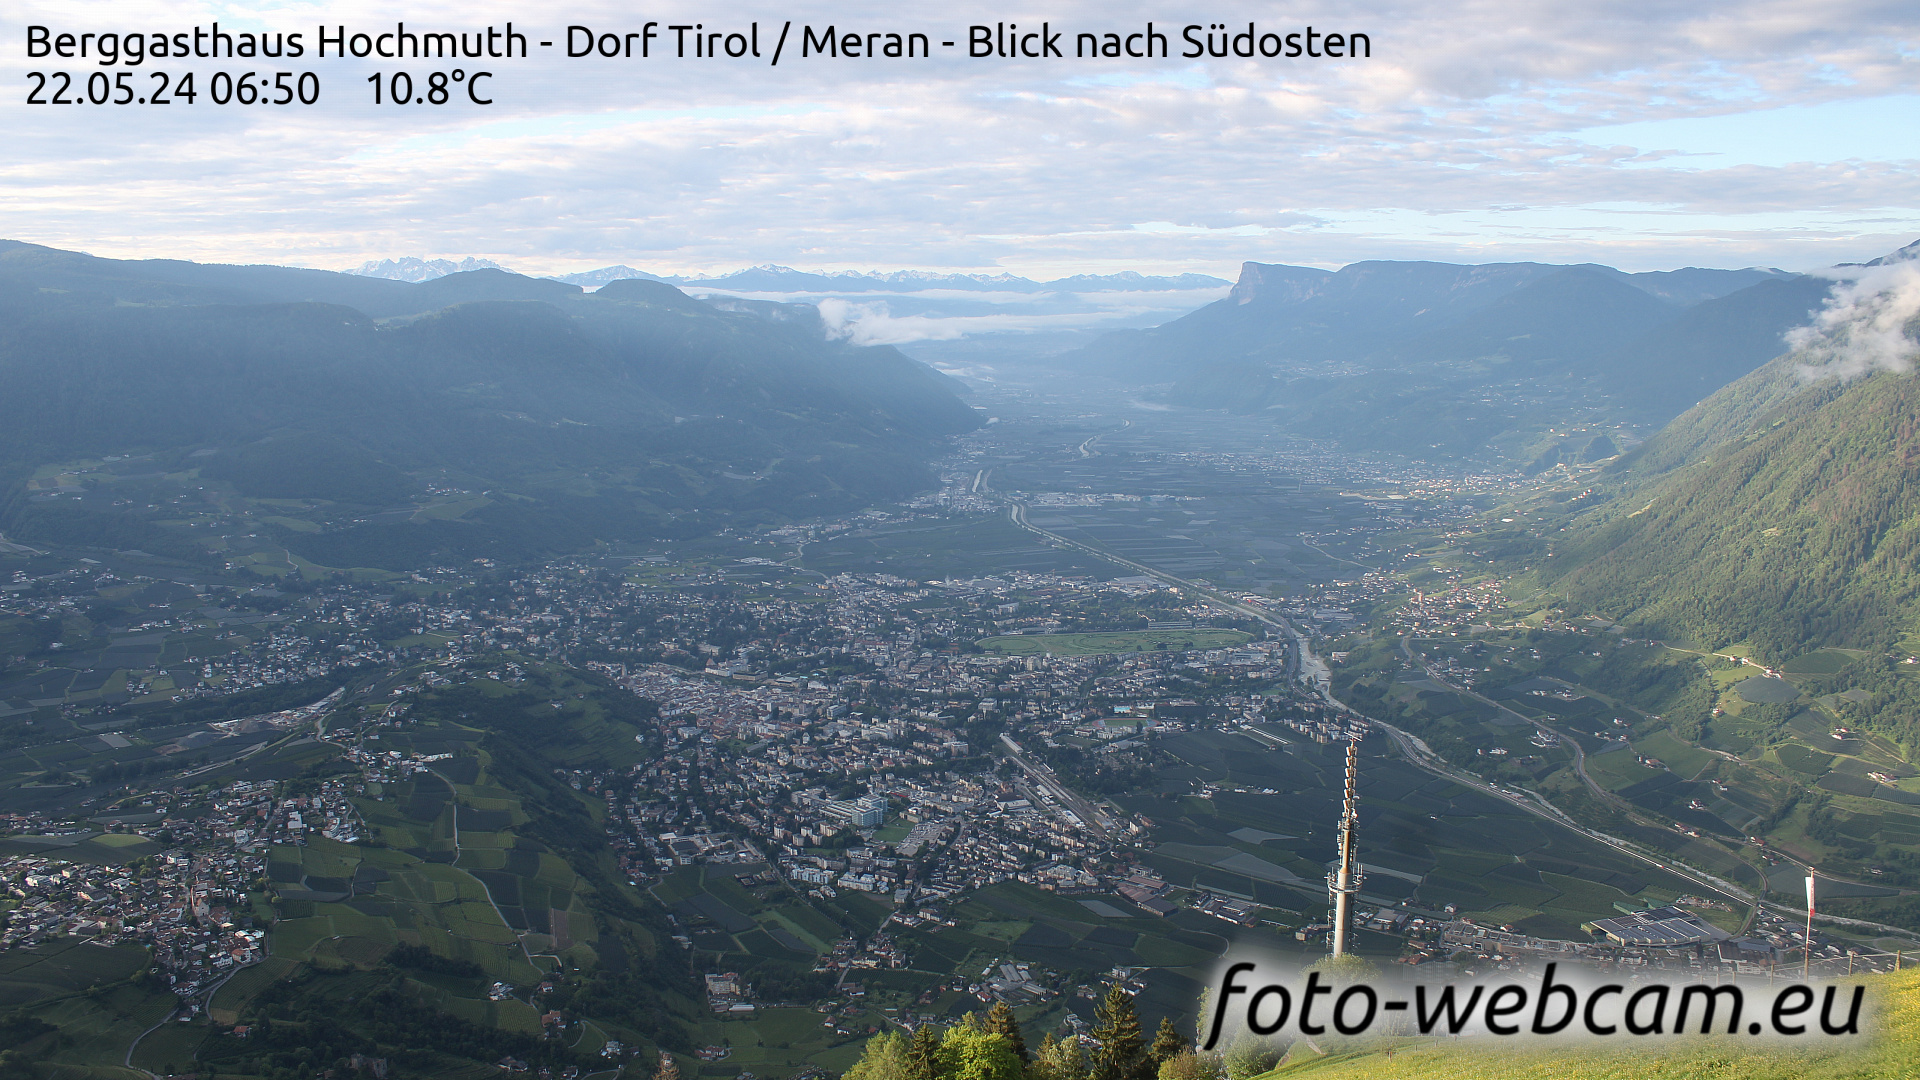 Dorf Tirol Ma. 06:56